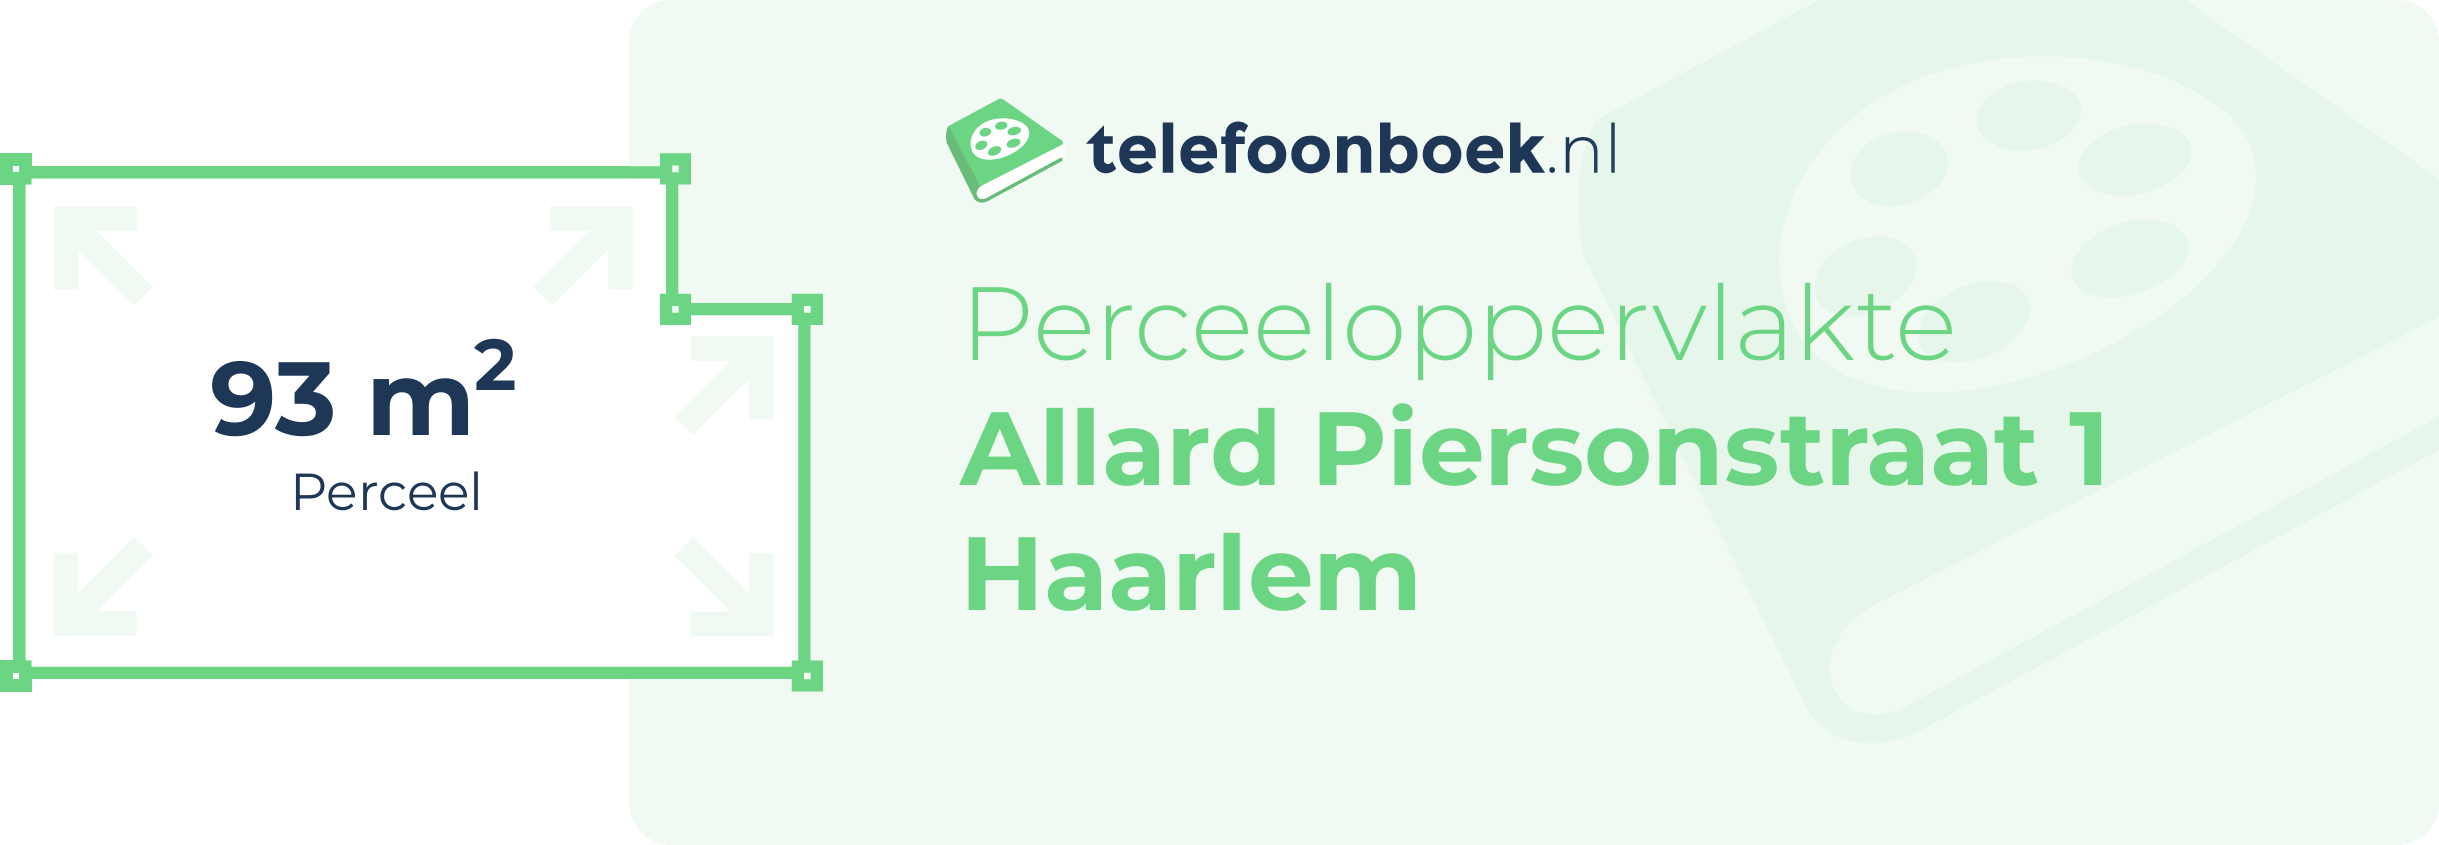 Perceeloppervlakte Allard Piersonstraat 1 Haarlem